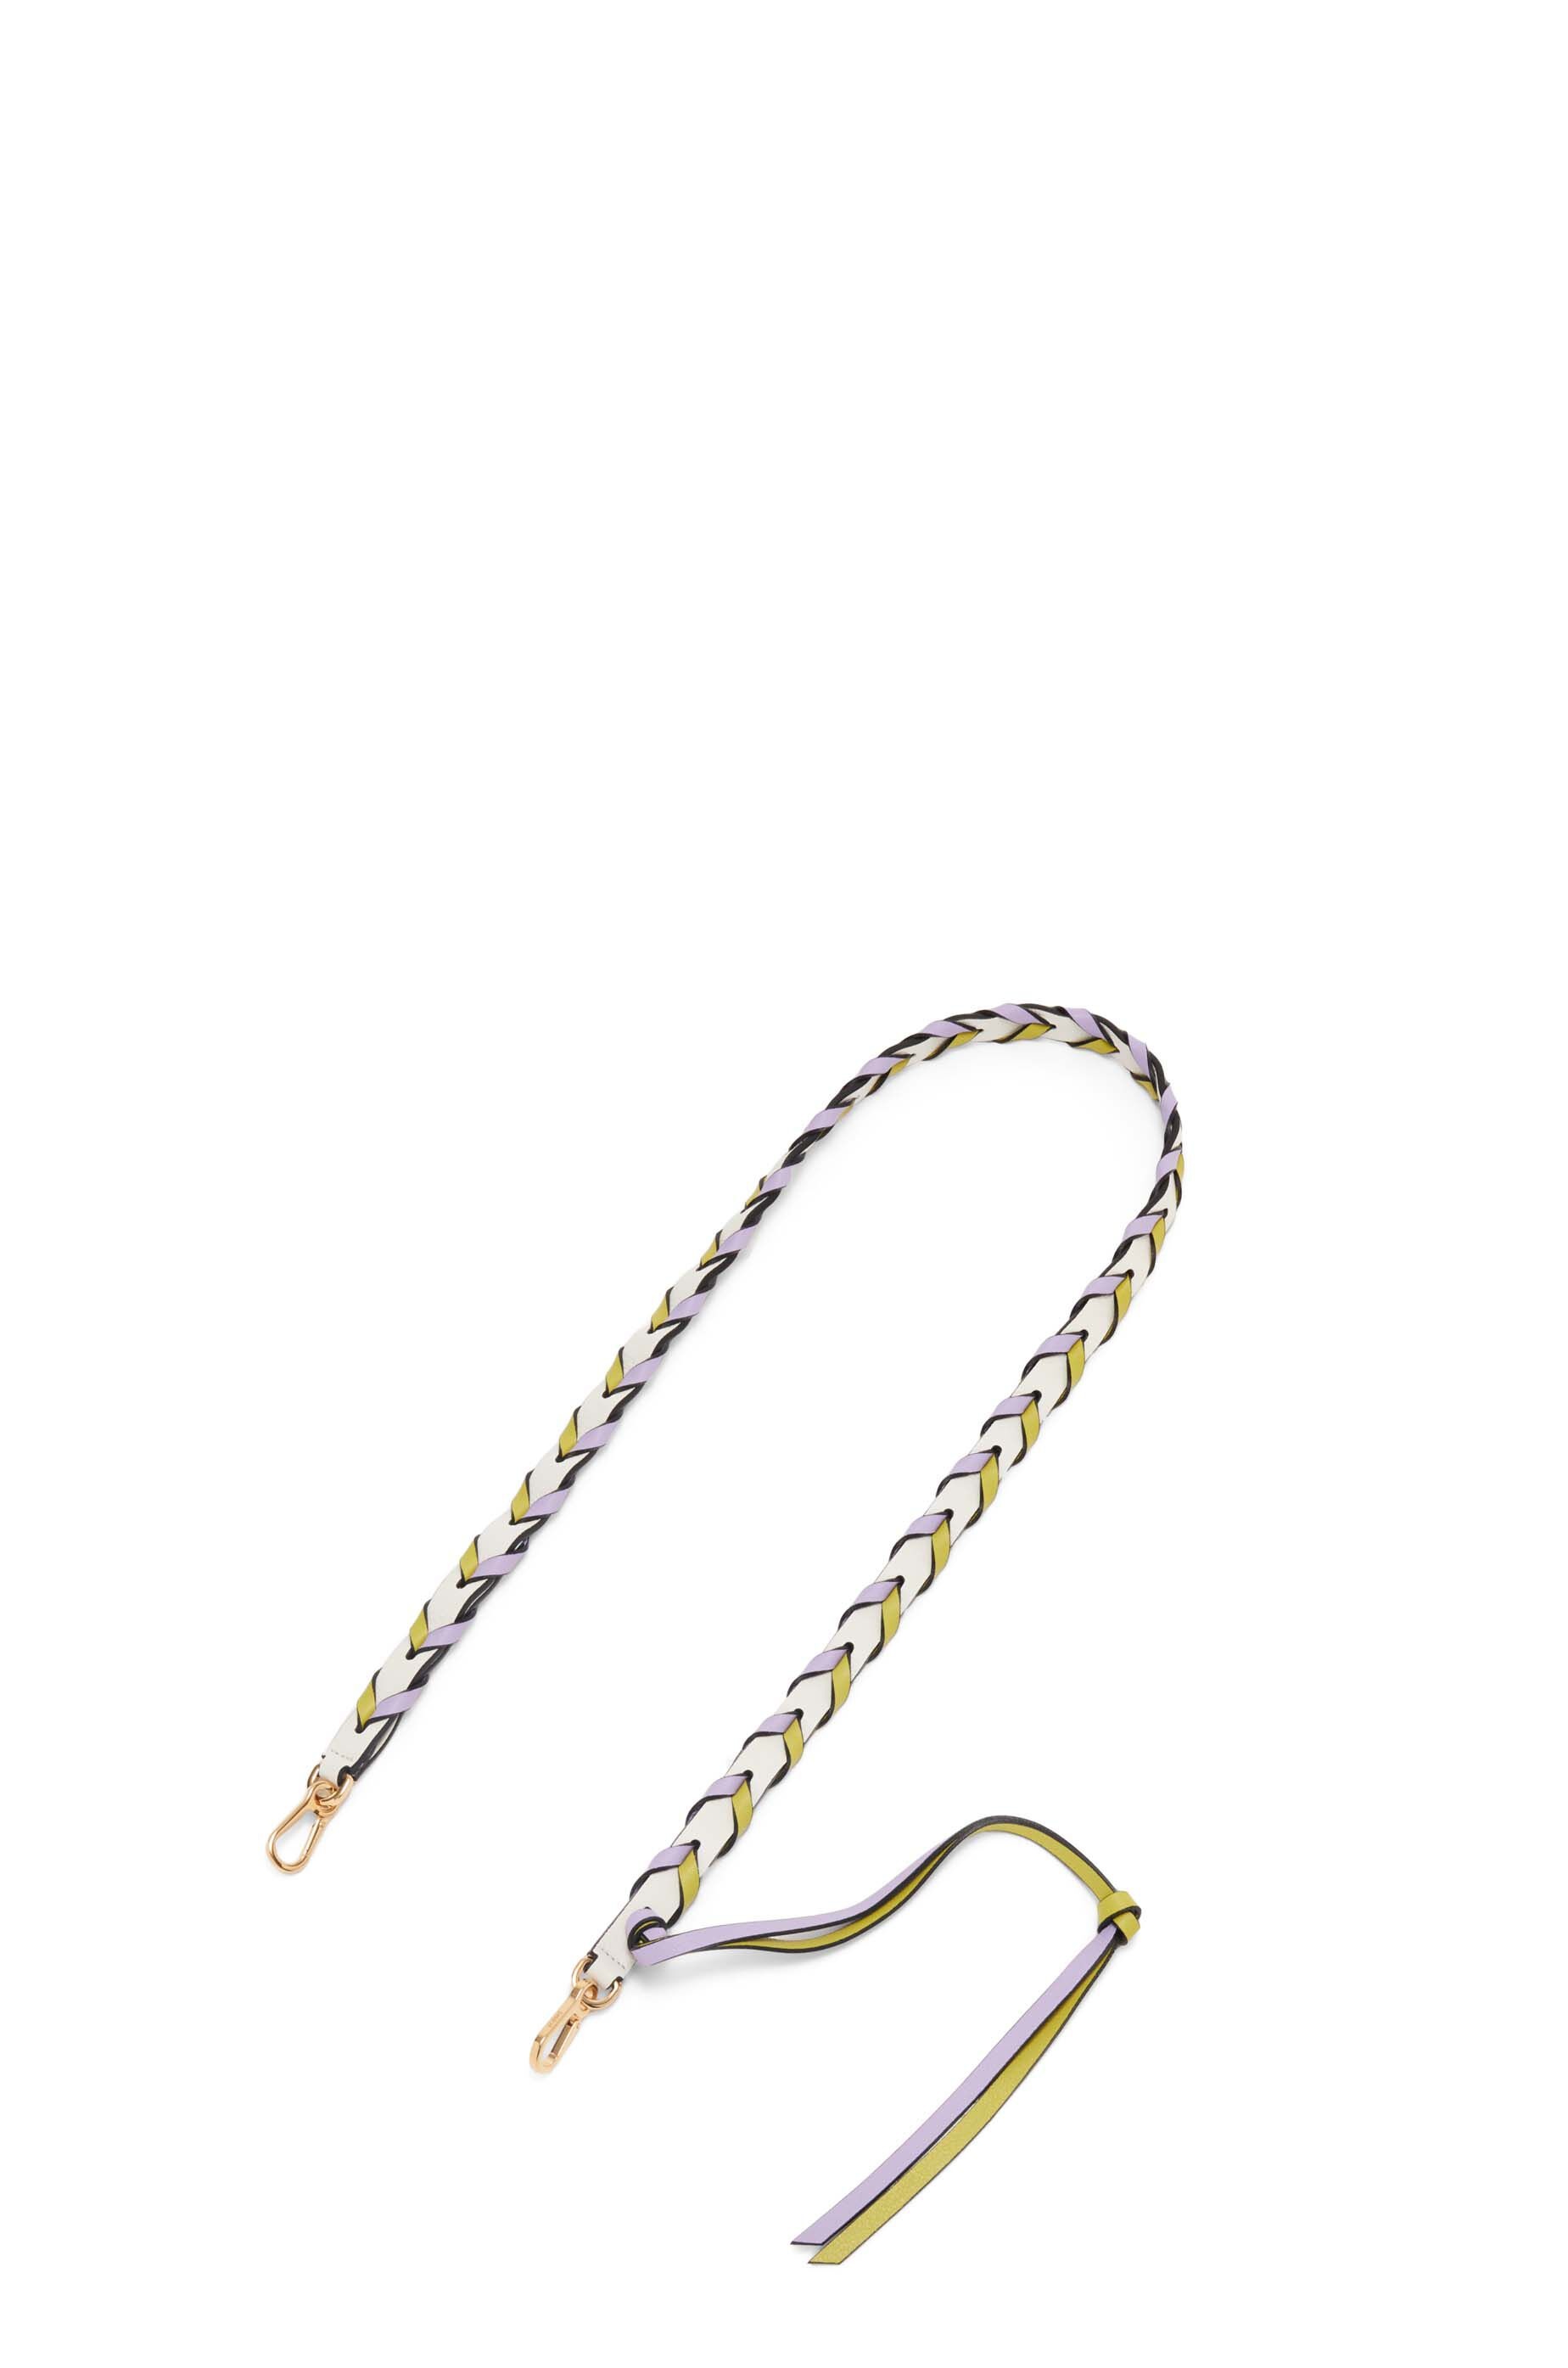 Thin braided strap in classic calfskin - 1